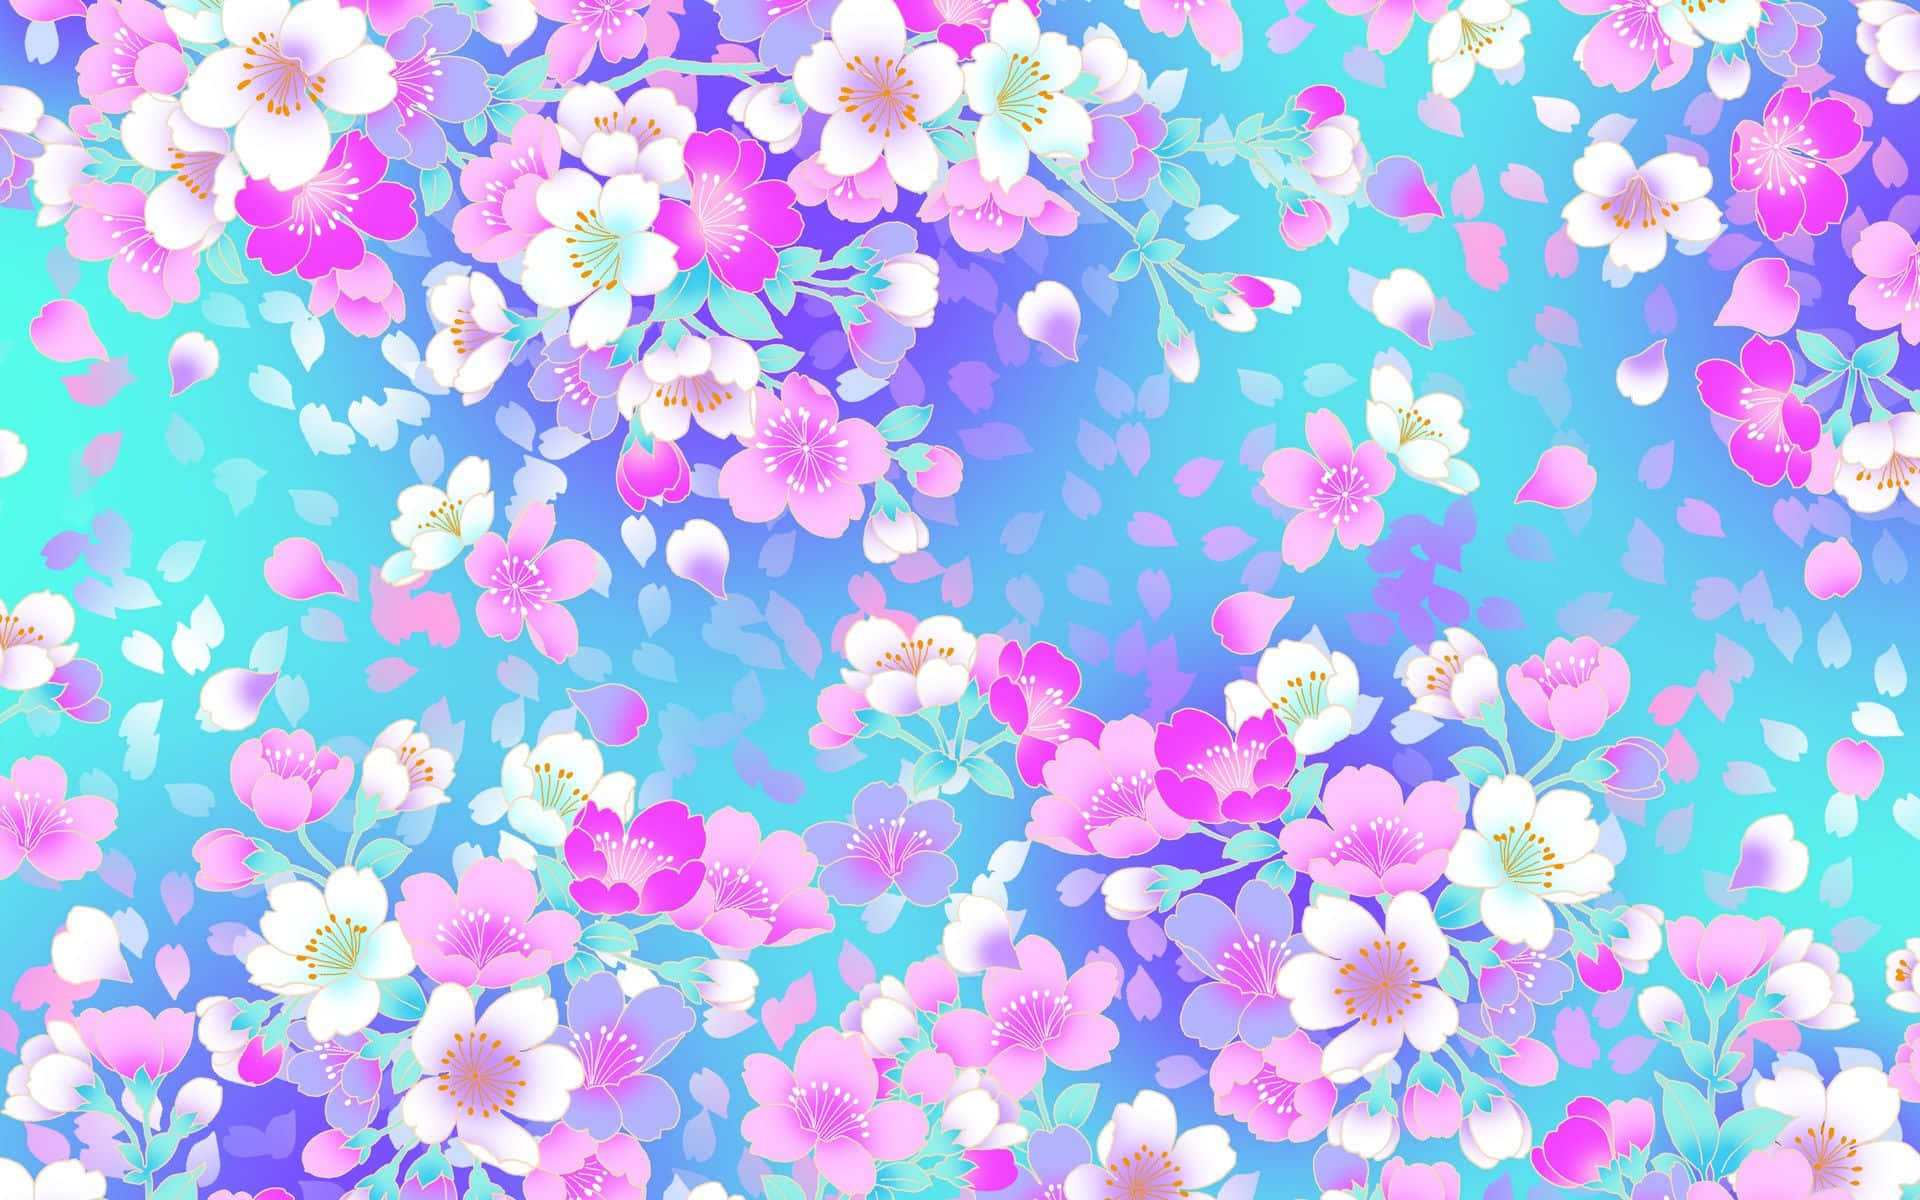 Girly Tumblr Cherry Blossom Petals